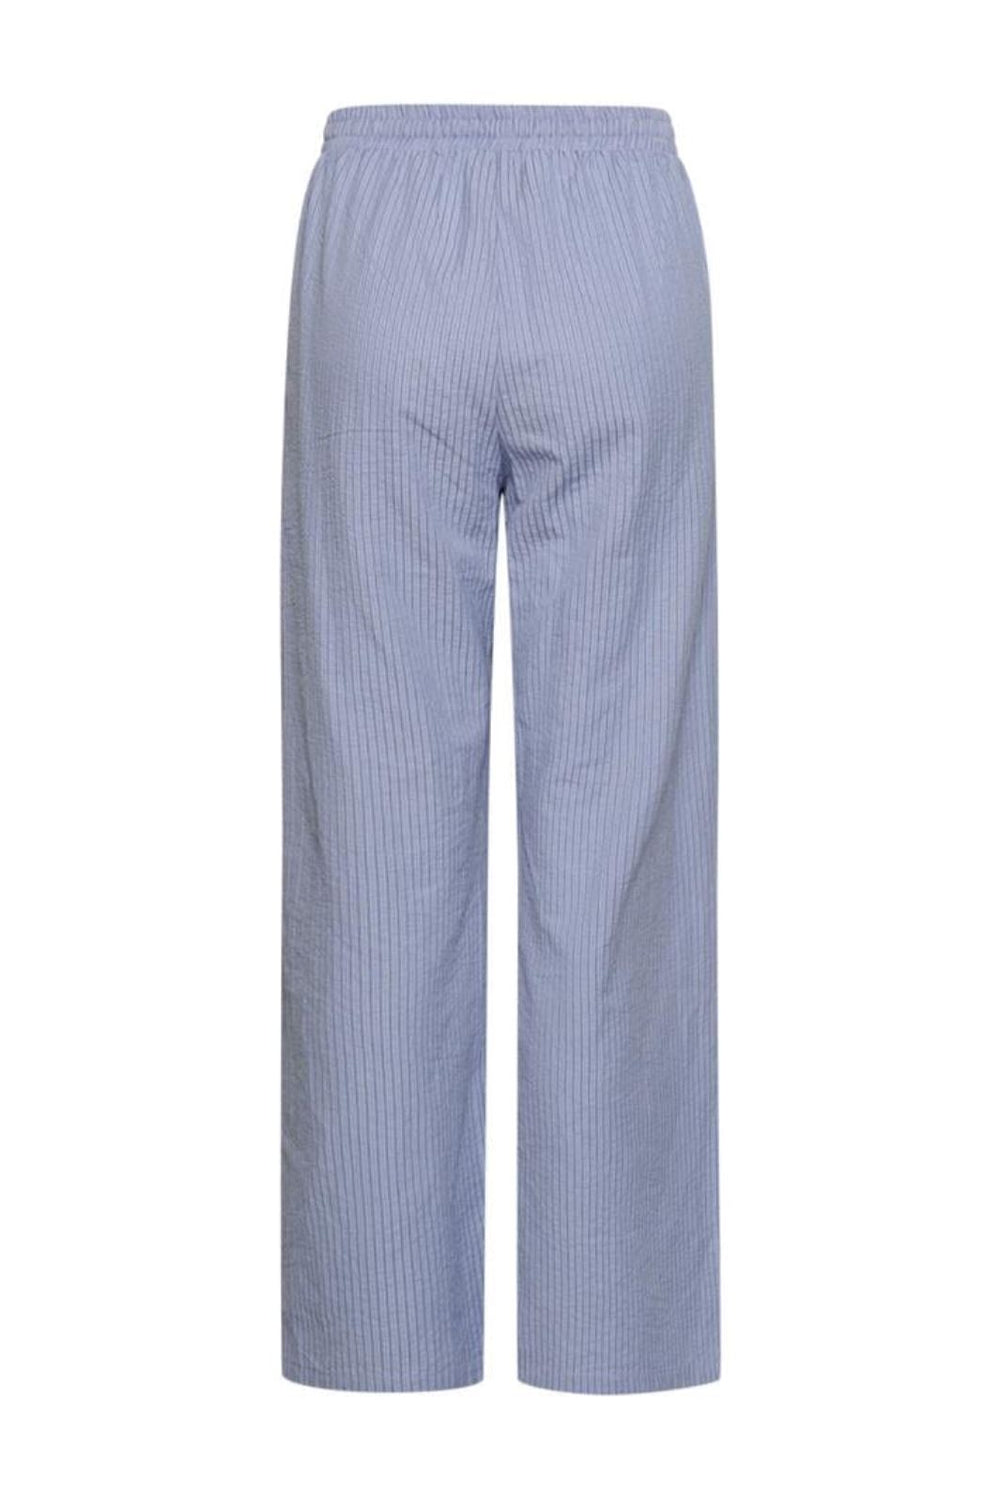 Noella - Rani Pants - Light Blue Stripe Bukser 